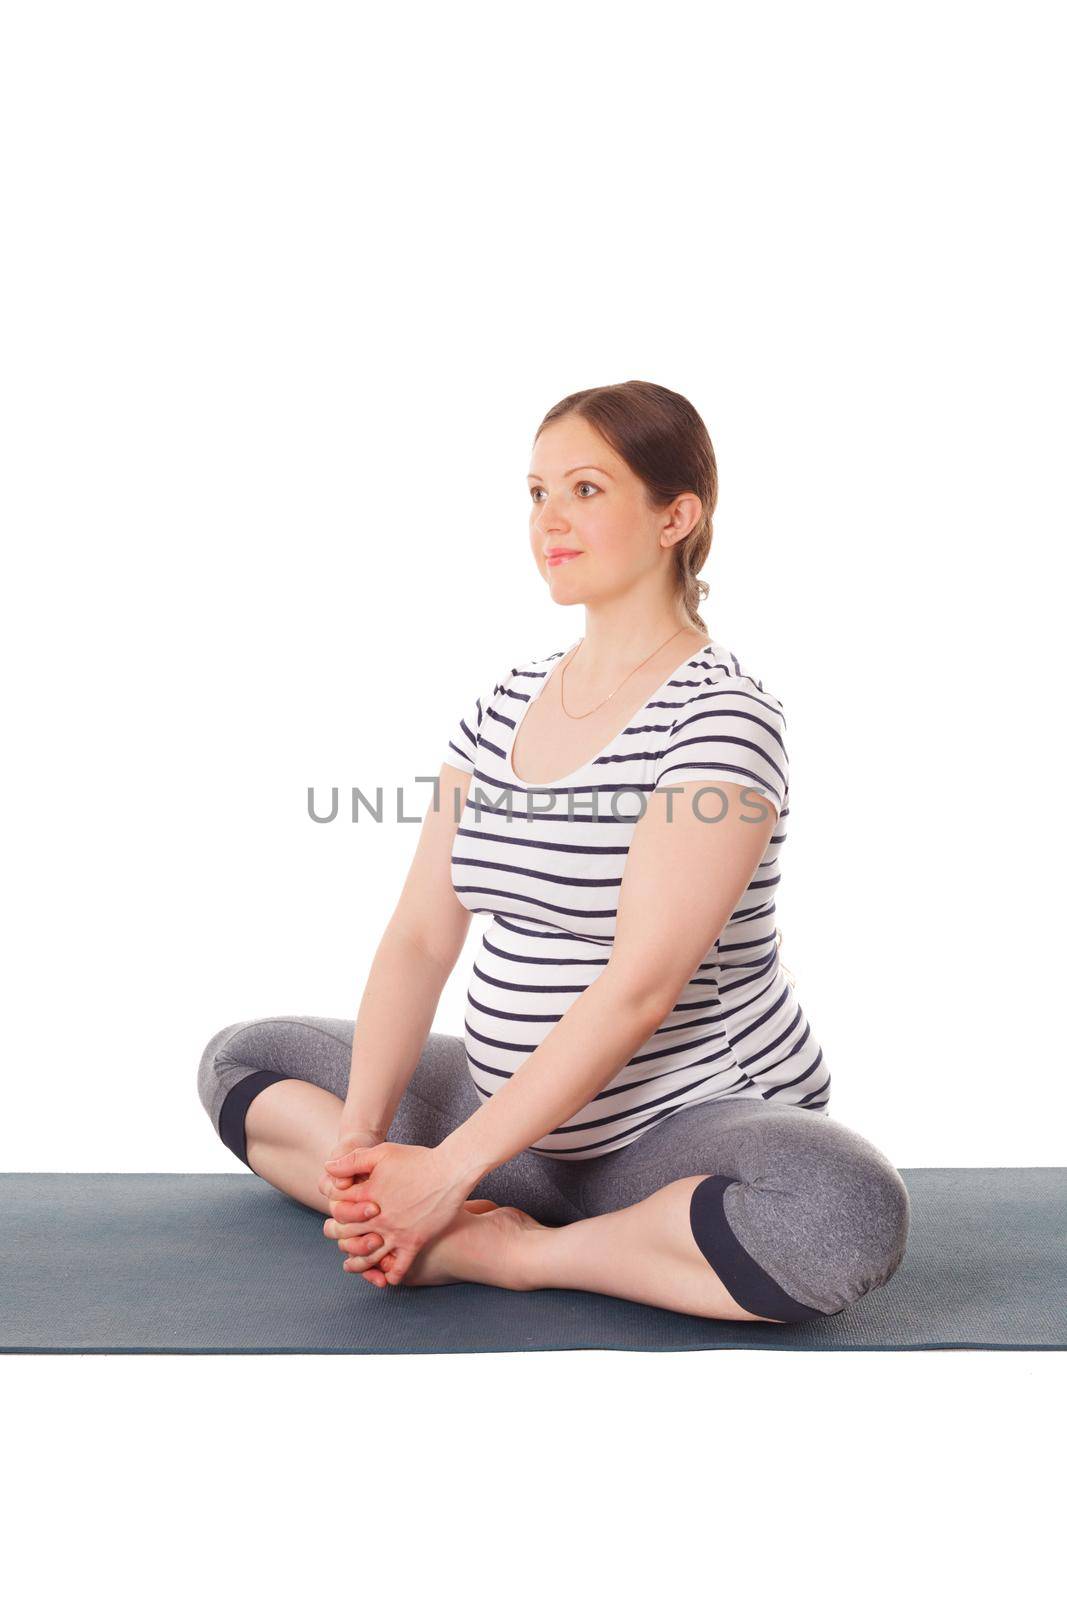 Pregnancy yoga exercise - pregnant woman doing asana Baddha Konasana Bound Angle Pose isolated on white background